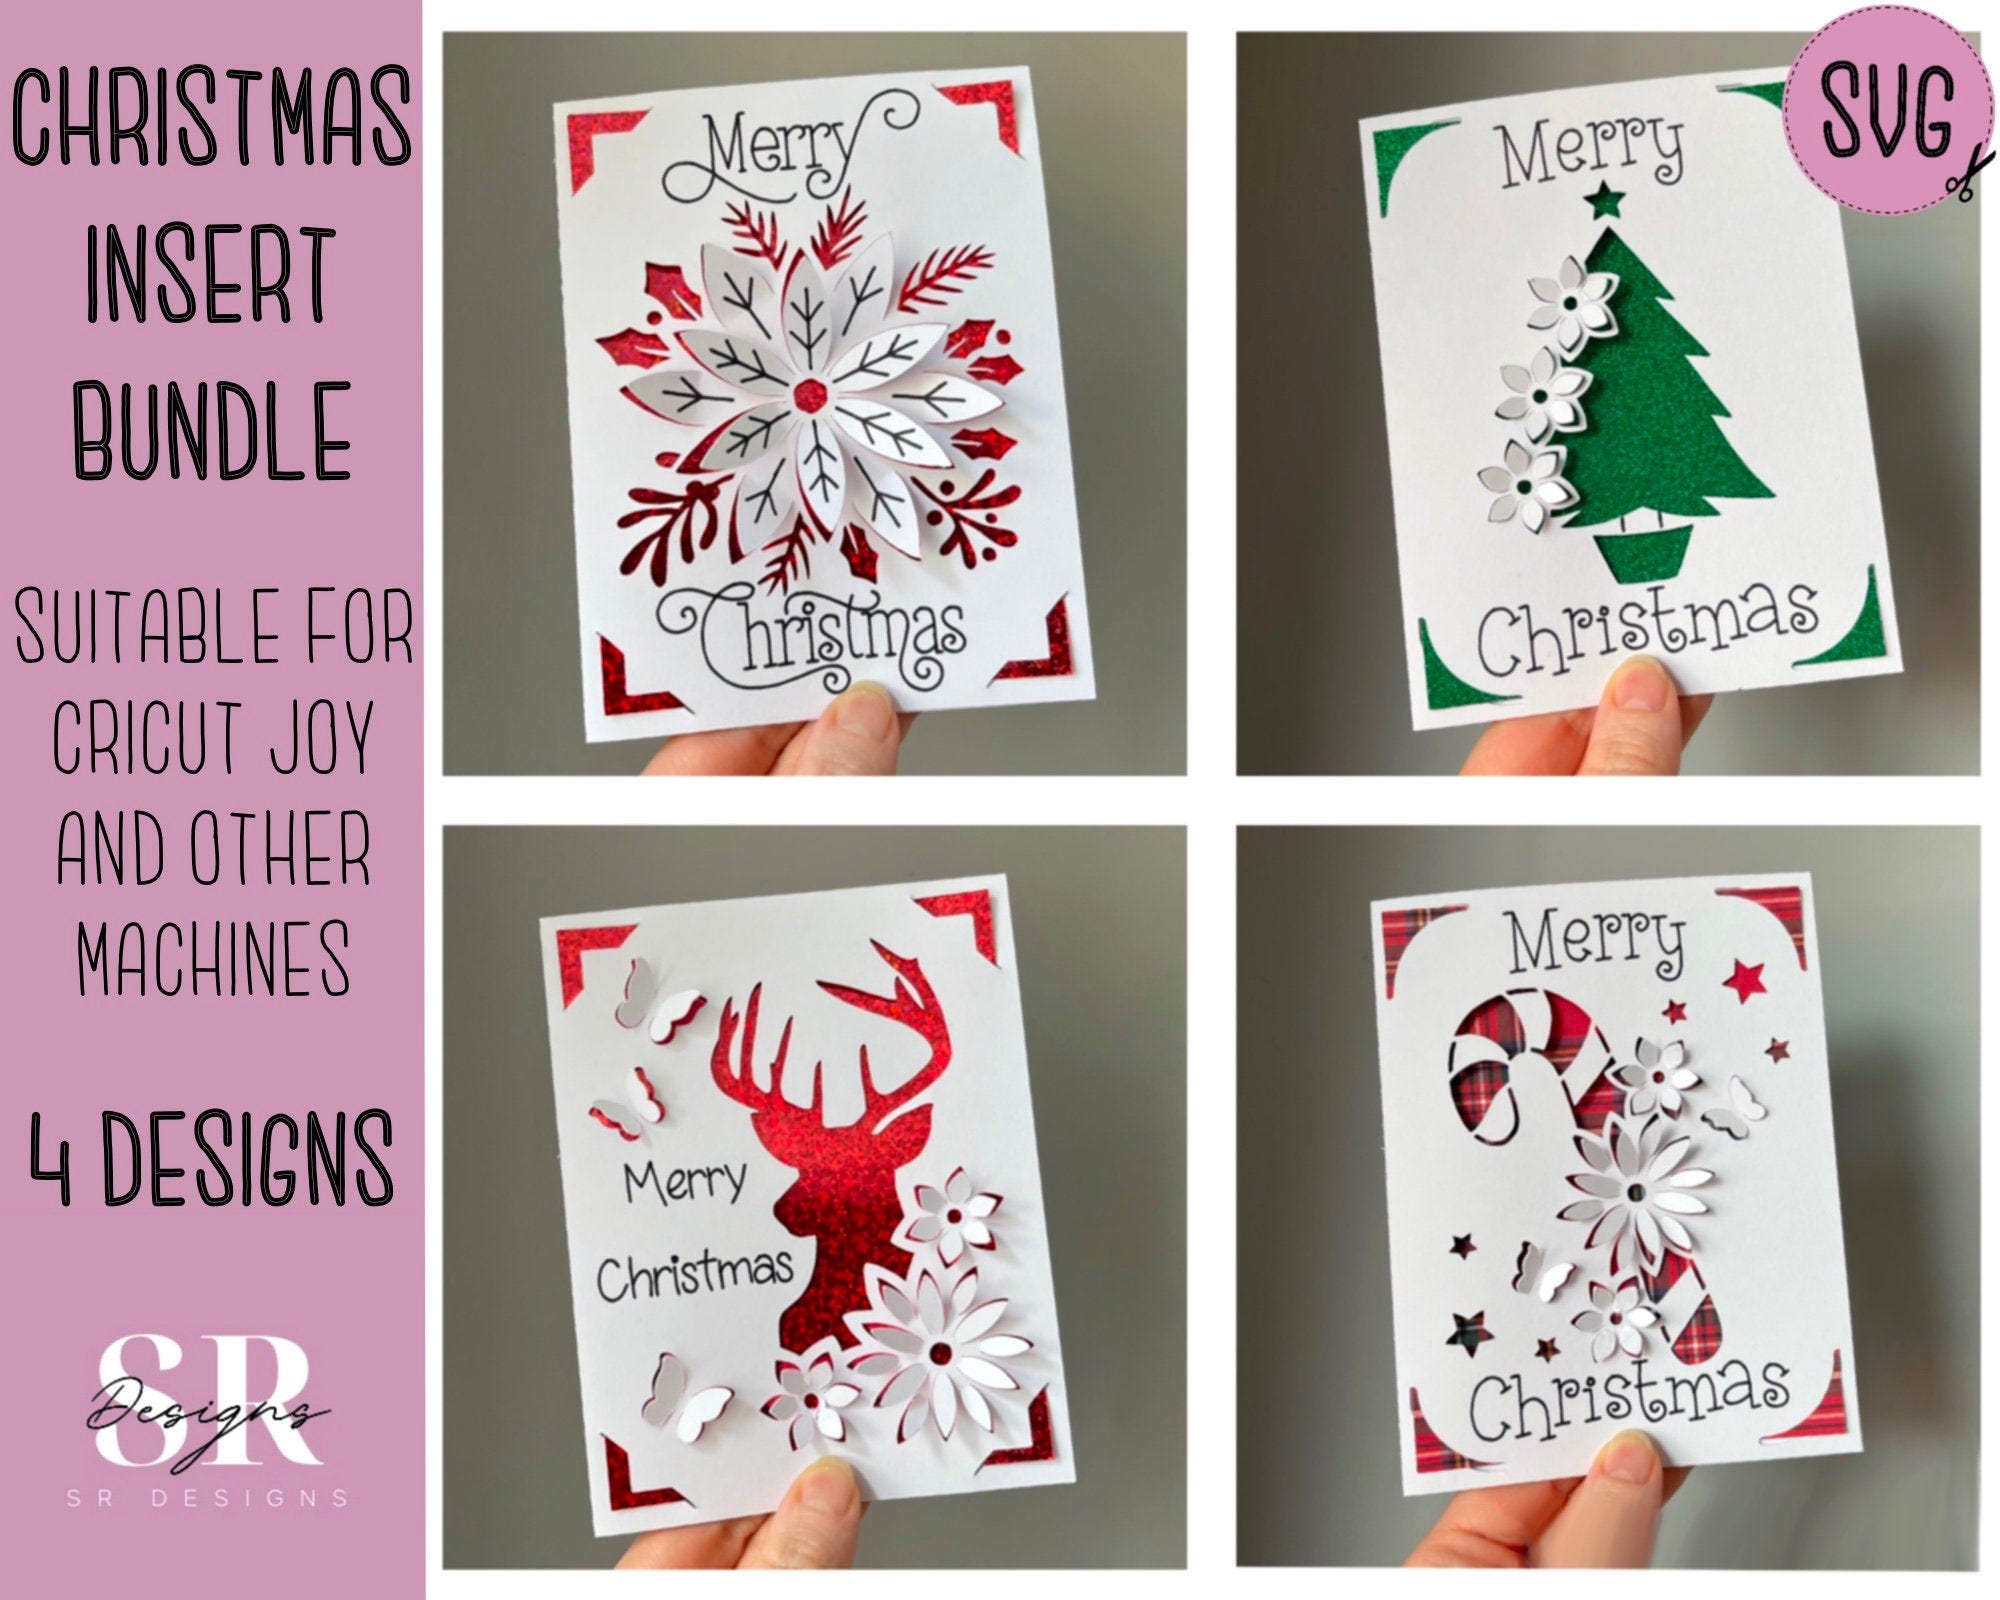 SVG: 3D Christmas insert Card Bundle. Christmas svg. Christmas card svg. Paper cutting. Christmas card svg bundle. 3D SVG.